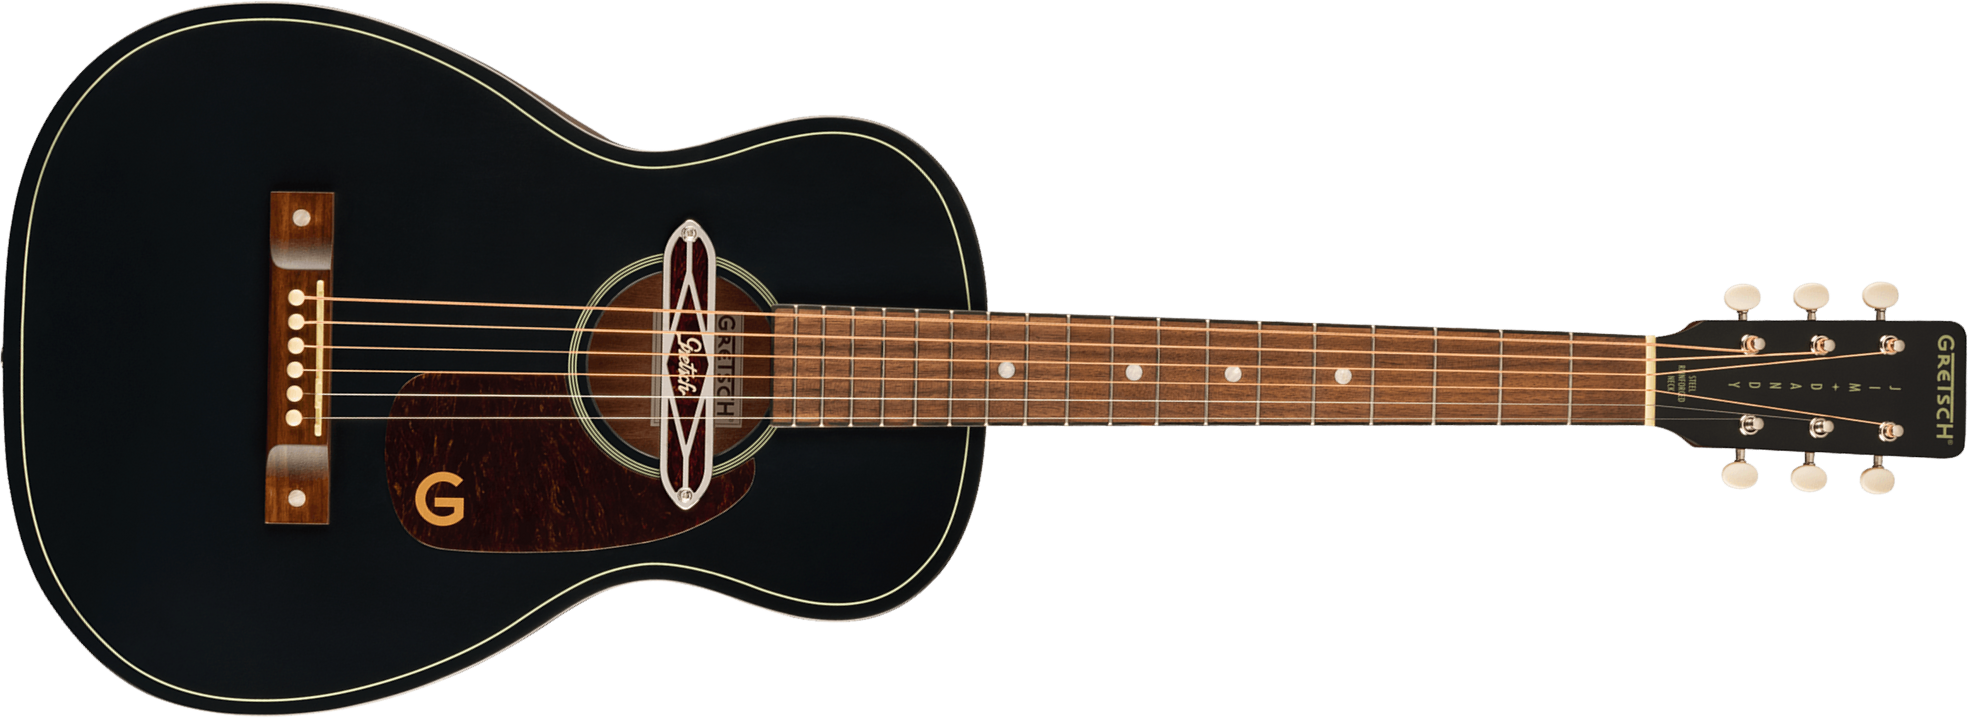 Gretsch Jim Dandy Deltolux Parlor Tout Sapele Noy - Black Top Semi Gloss - Elektroakustische Gitarre - Main picture